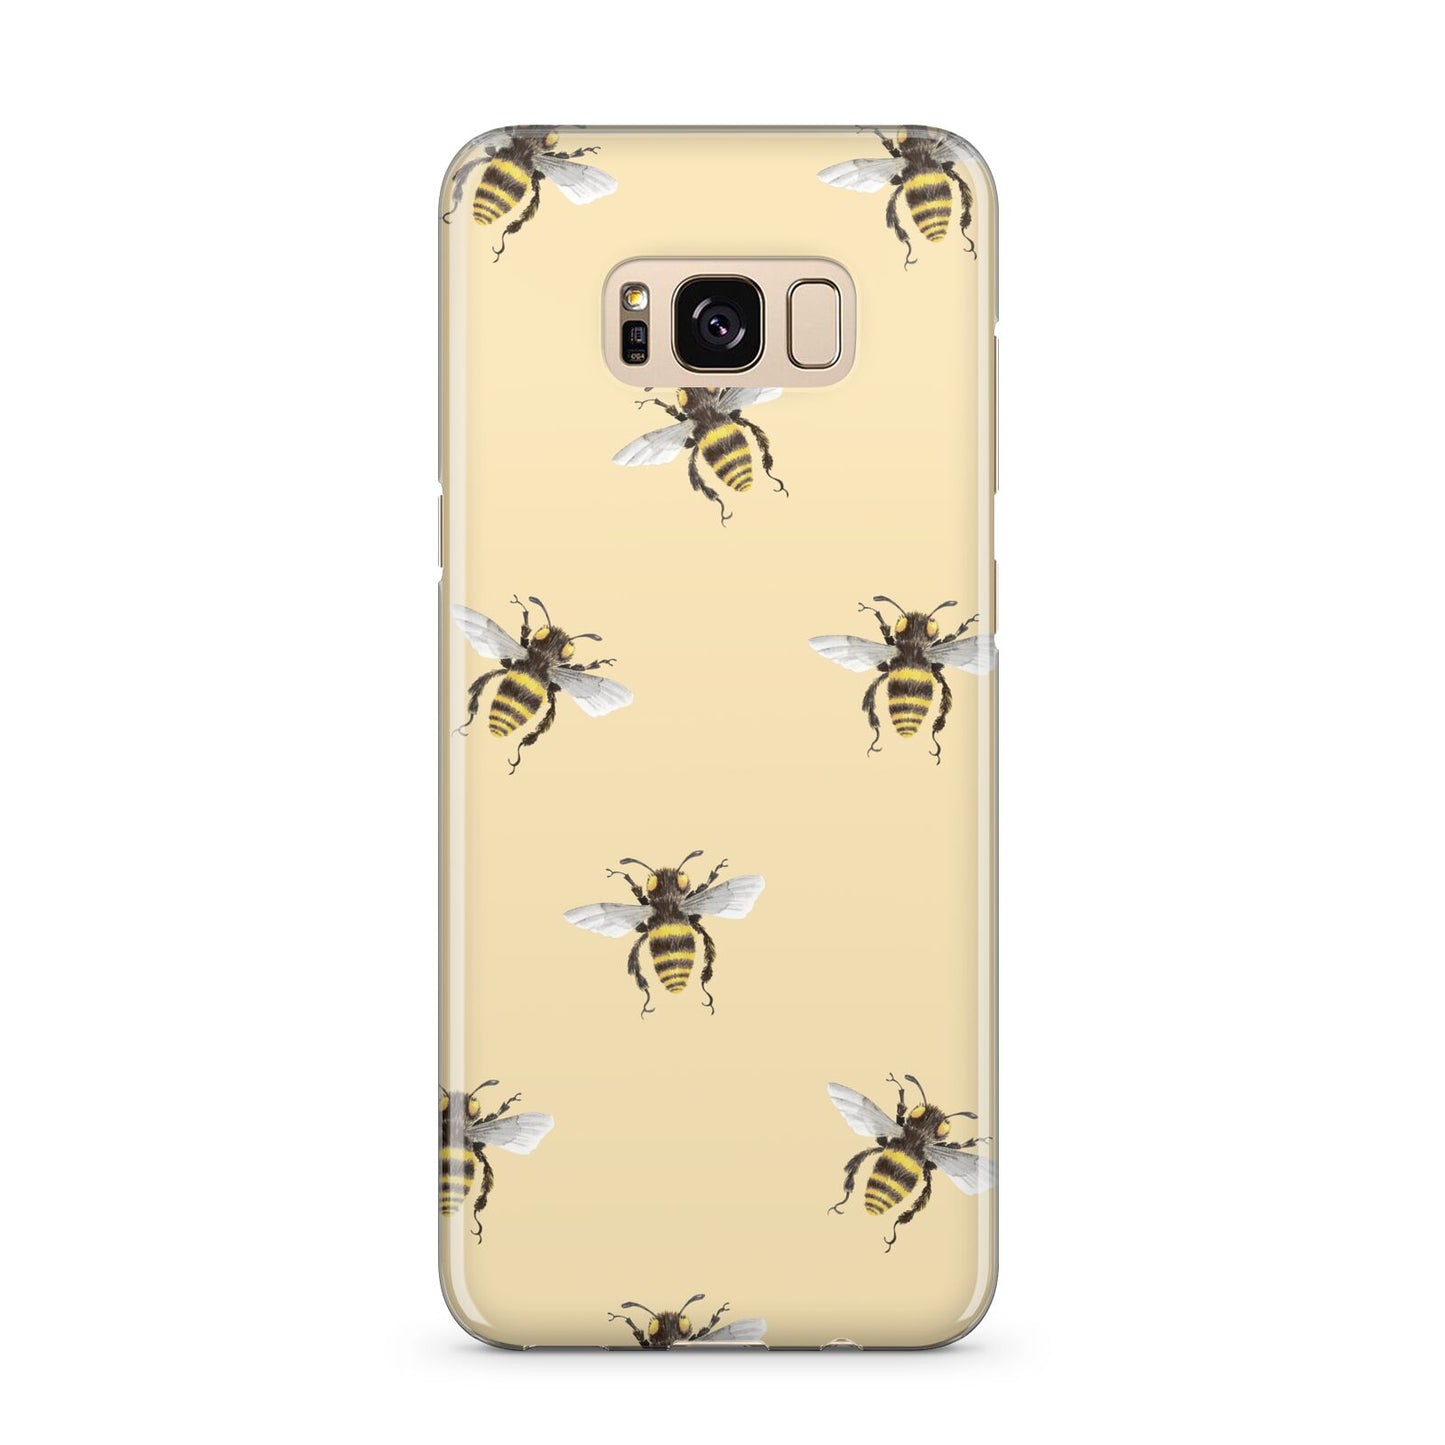 Bee Illustrations Samsung Galaxy S8 Plus Case